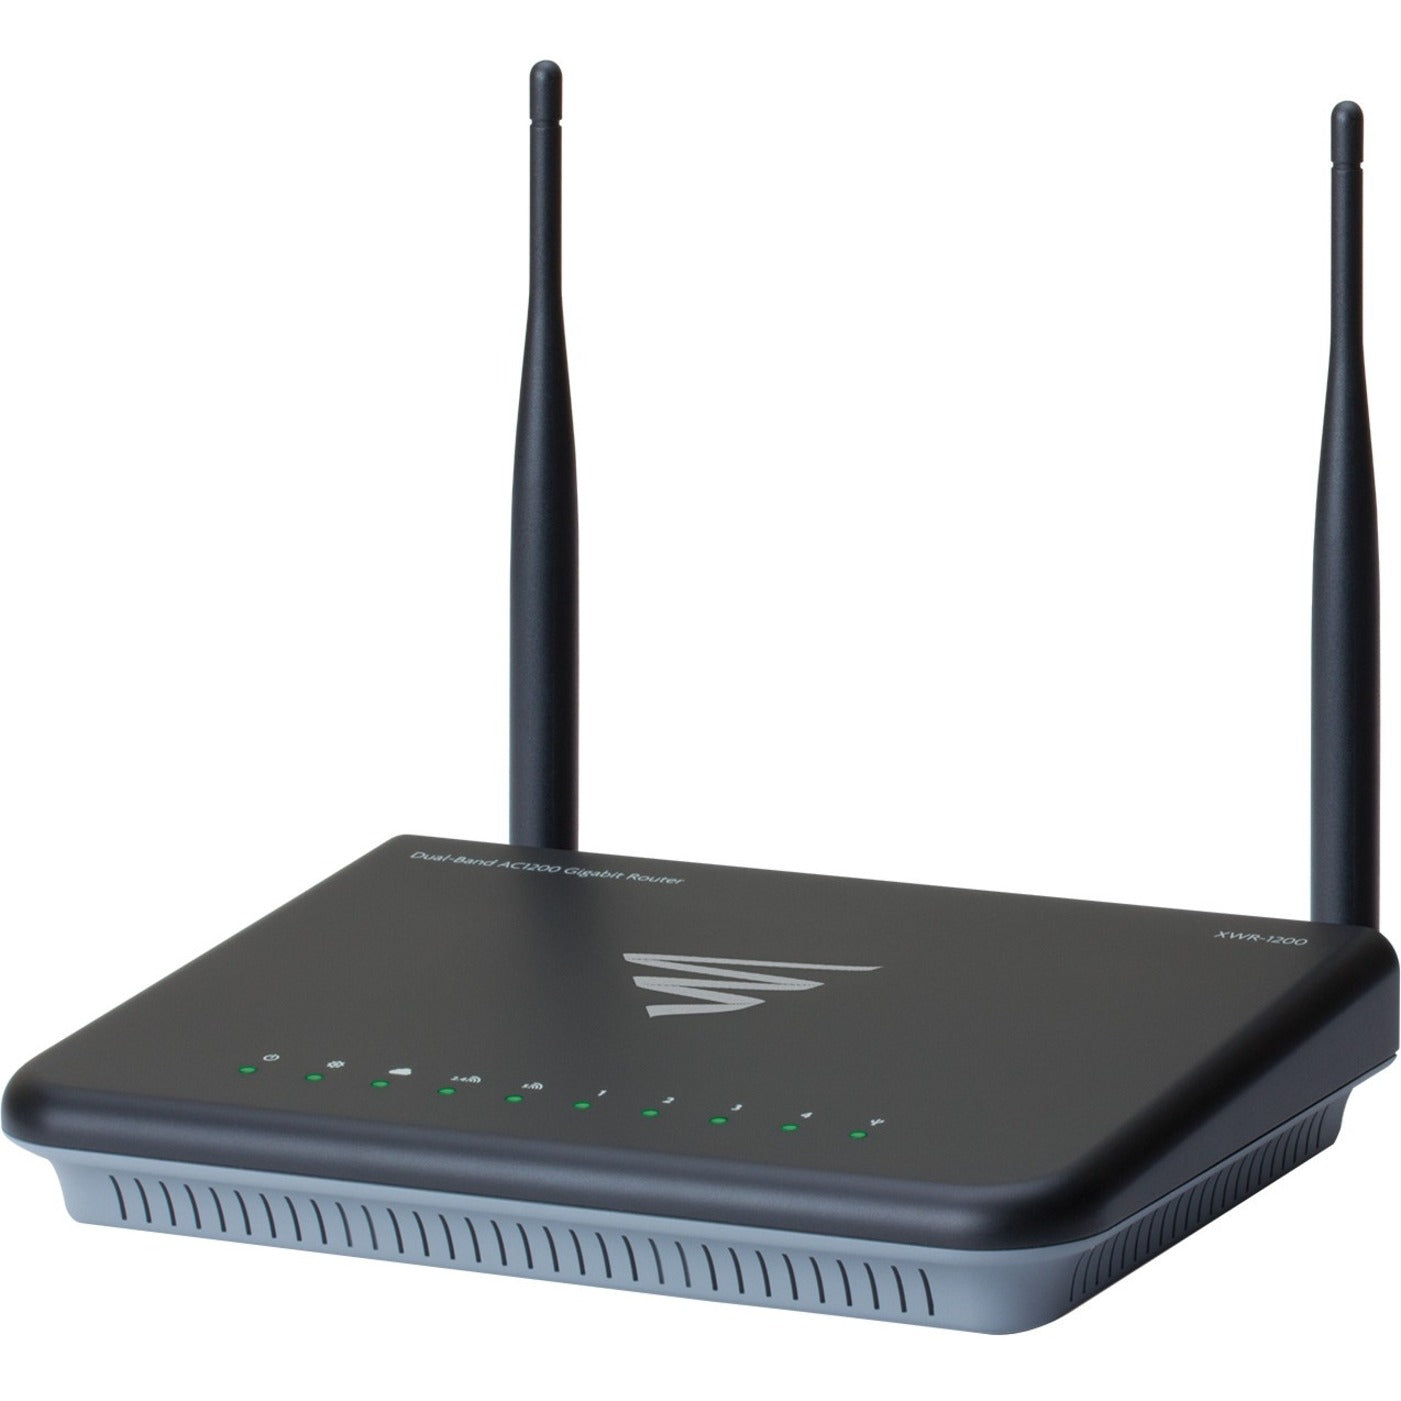 Luxul XWR-1200 Dual-Band Wireless AC1200 Gigabit Router, Wi-Fi 5, 3 Year Warranty, RoHS Certified